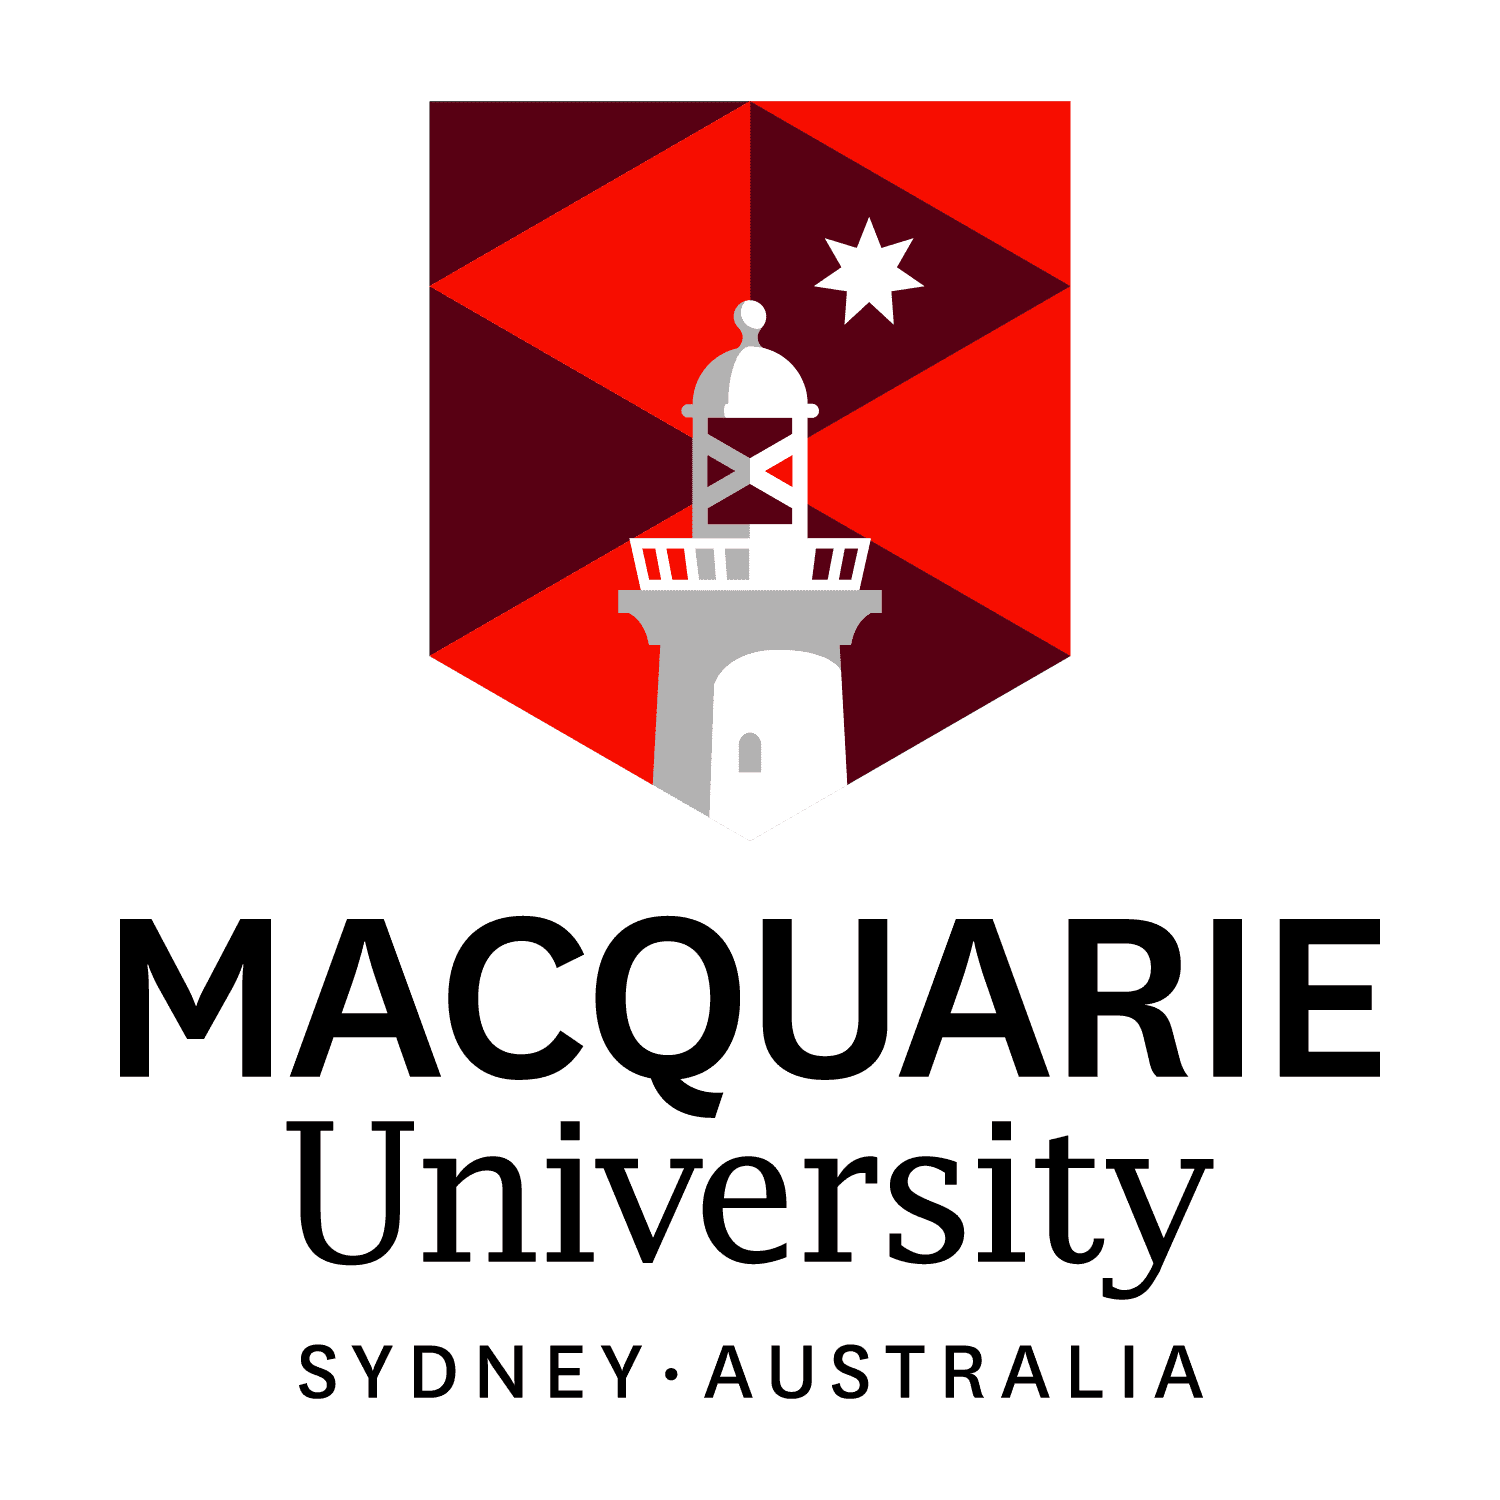 macquarie-university-logo-freelogovectors.net_.png